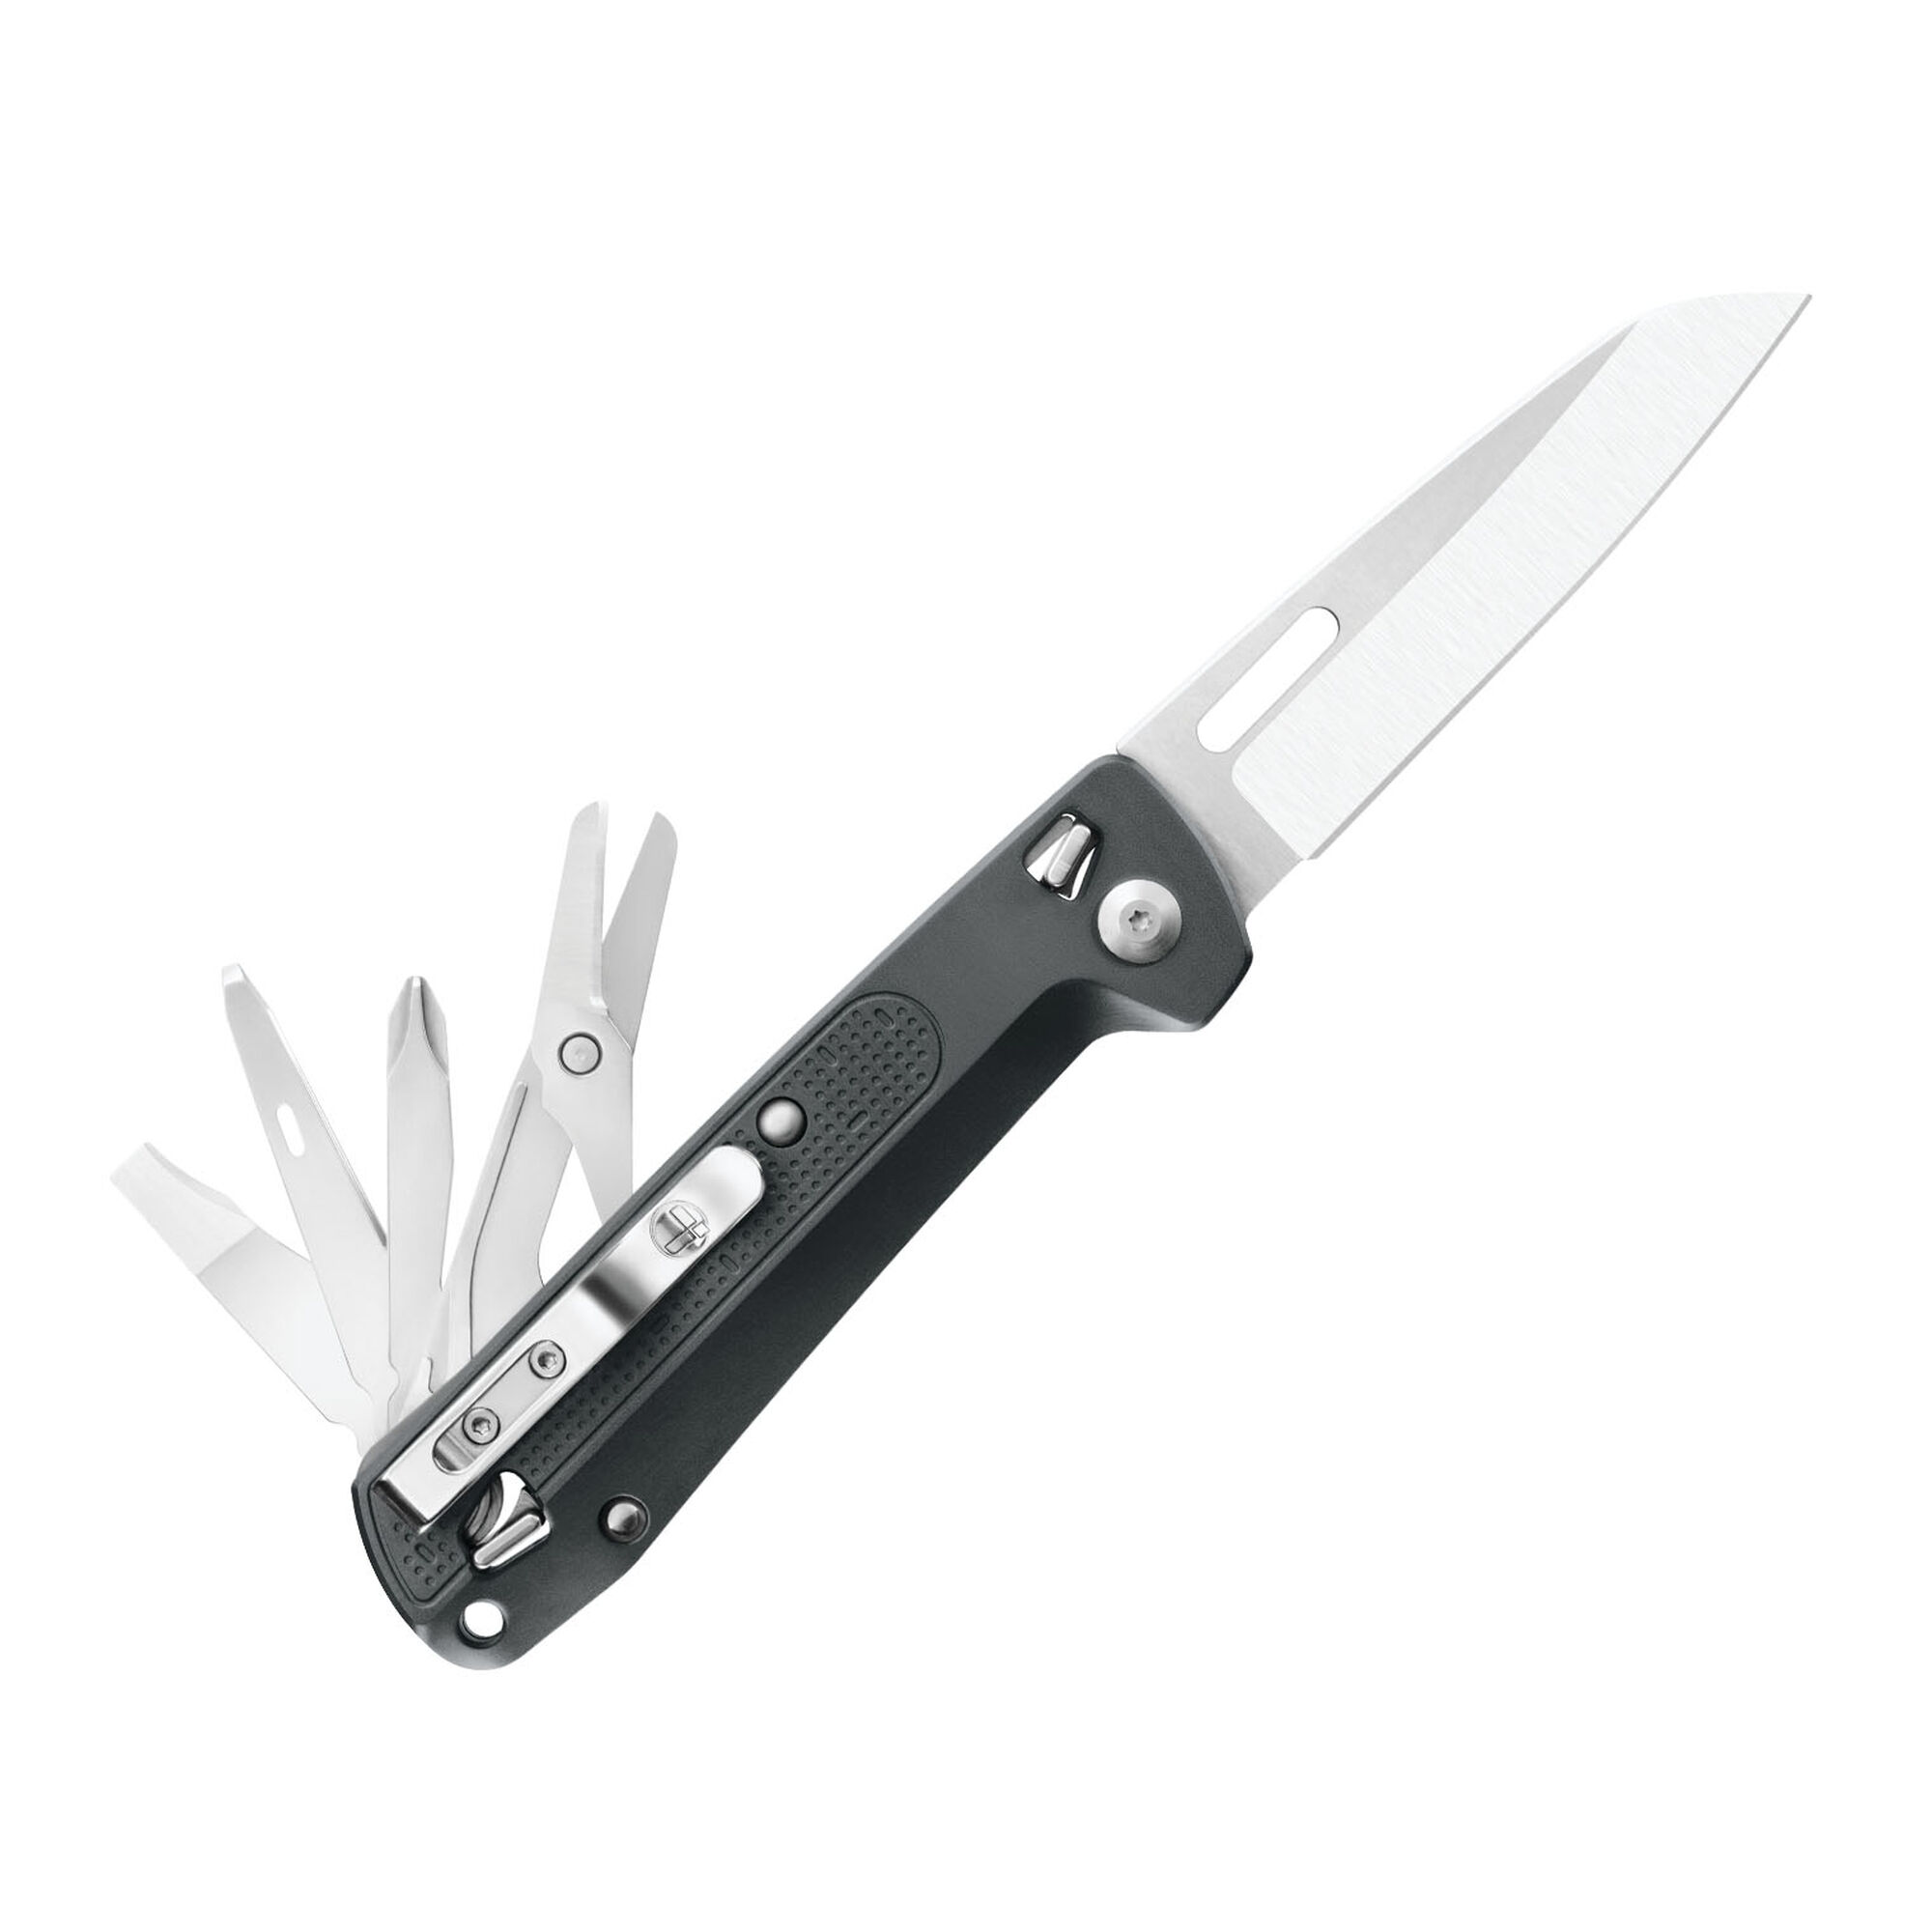 The Knife Edge V2 Pocket Organizer